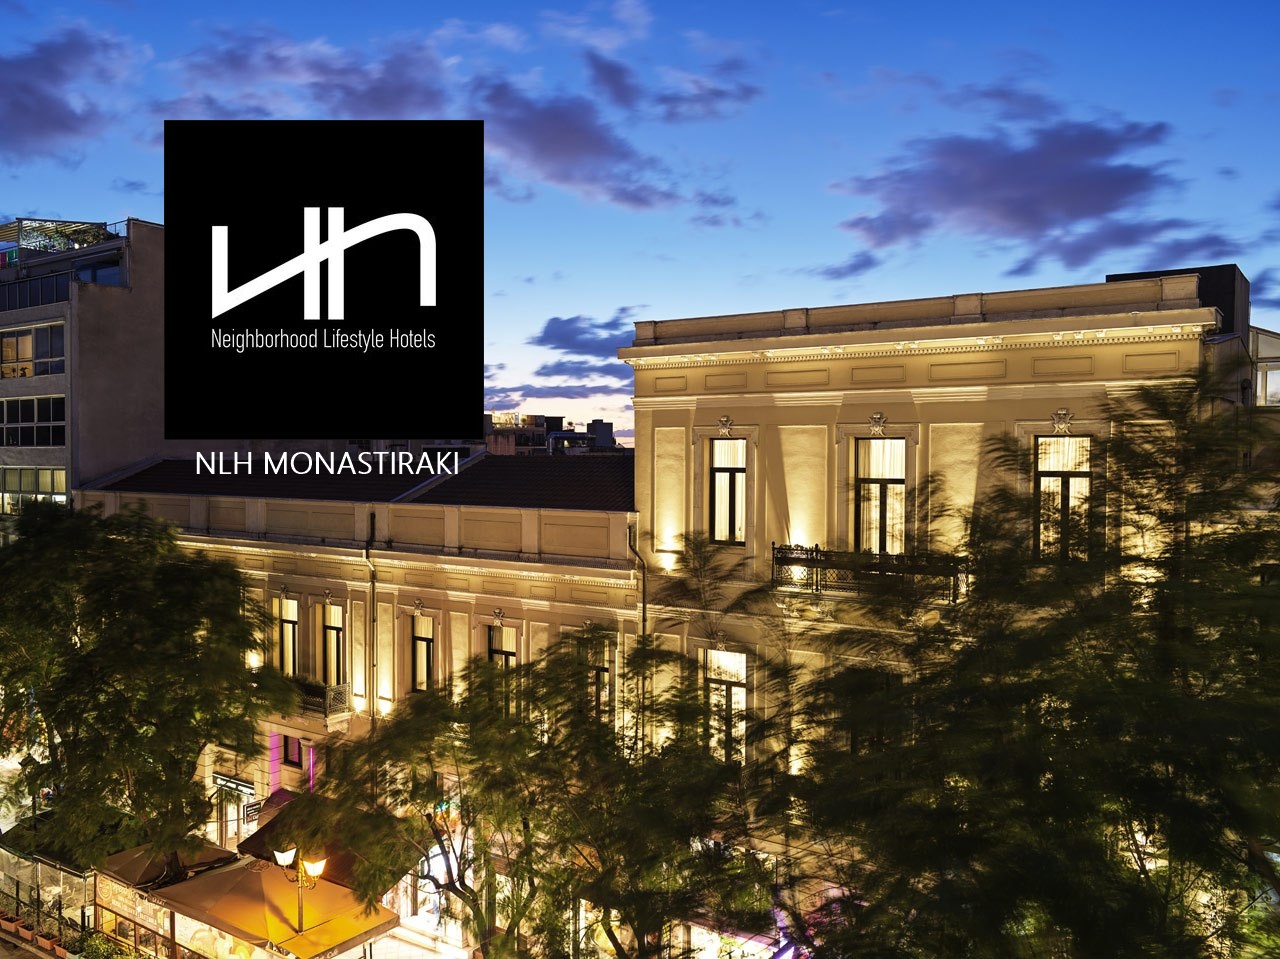 NLH MONASTIRAKI hotel, Athens, Greece